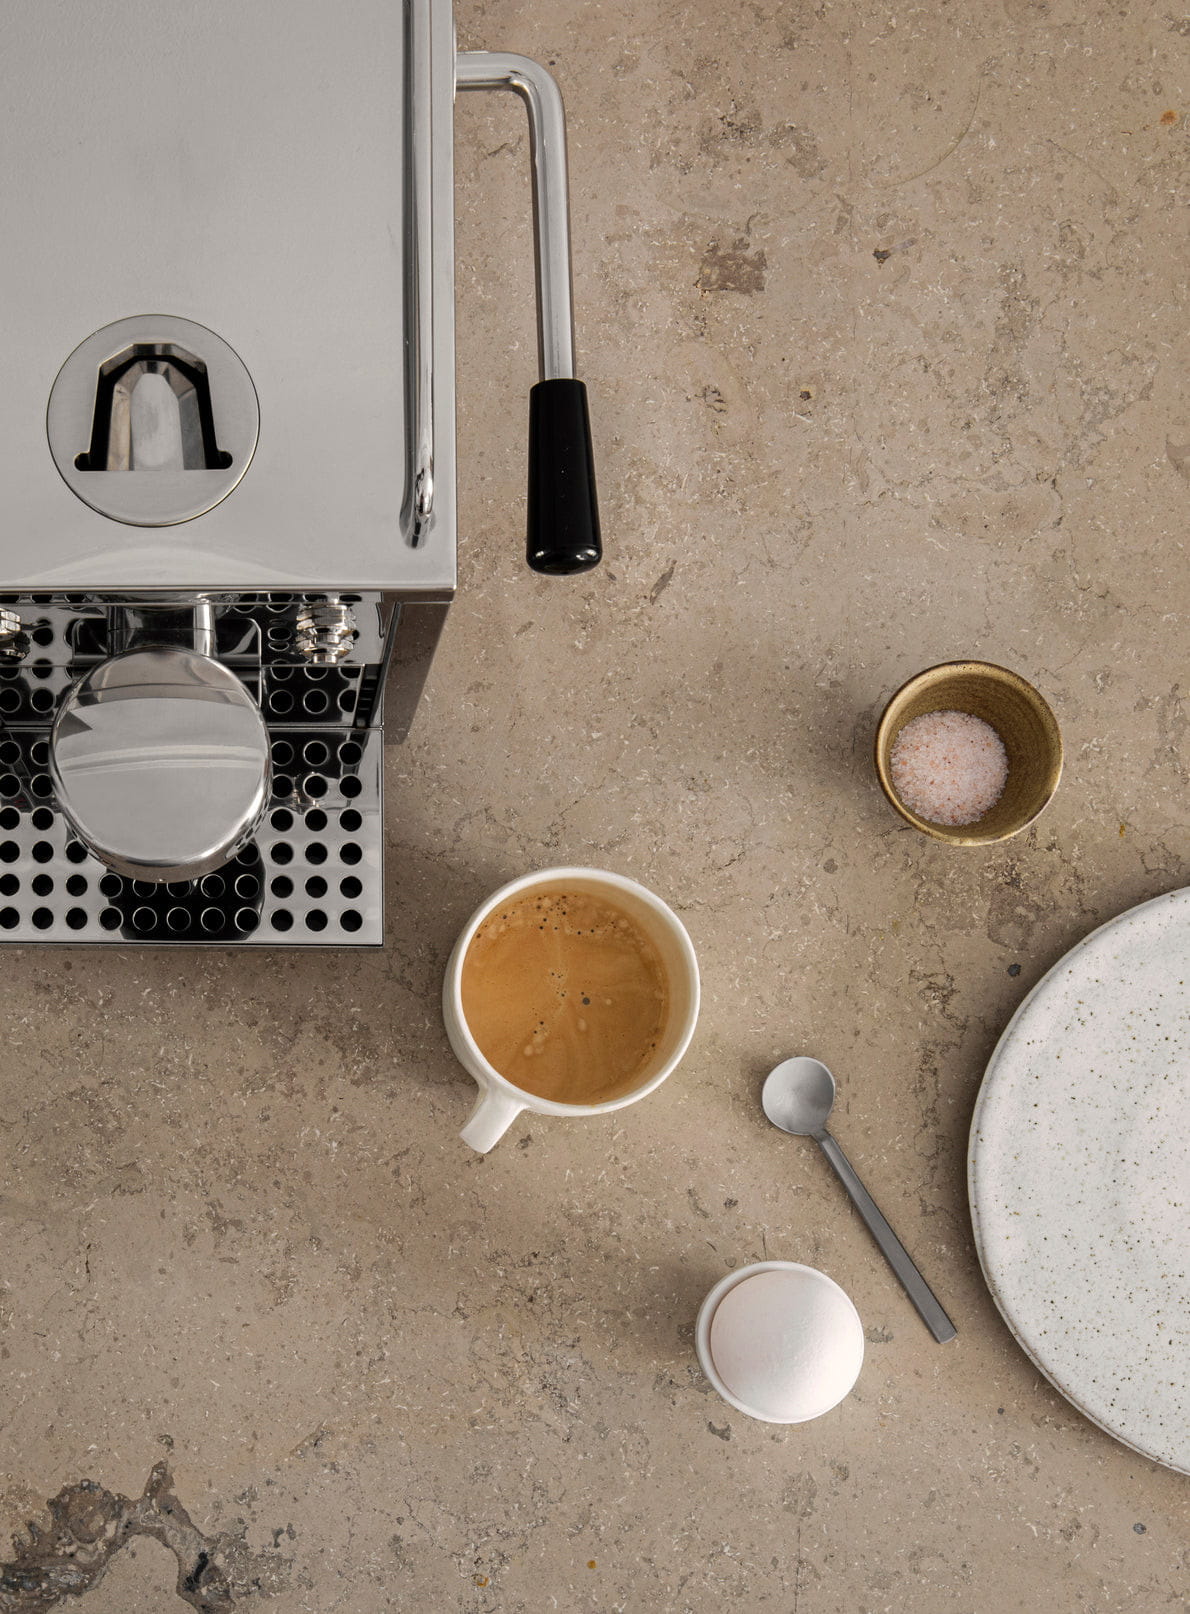 Sjöstrand Espresso Capsule Machine, acier inoxydable